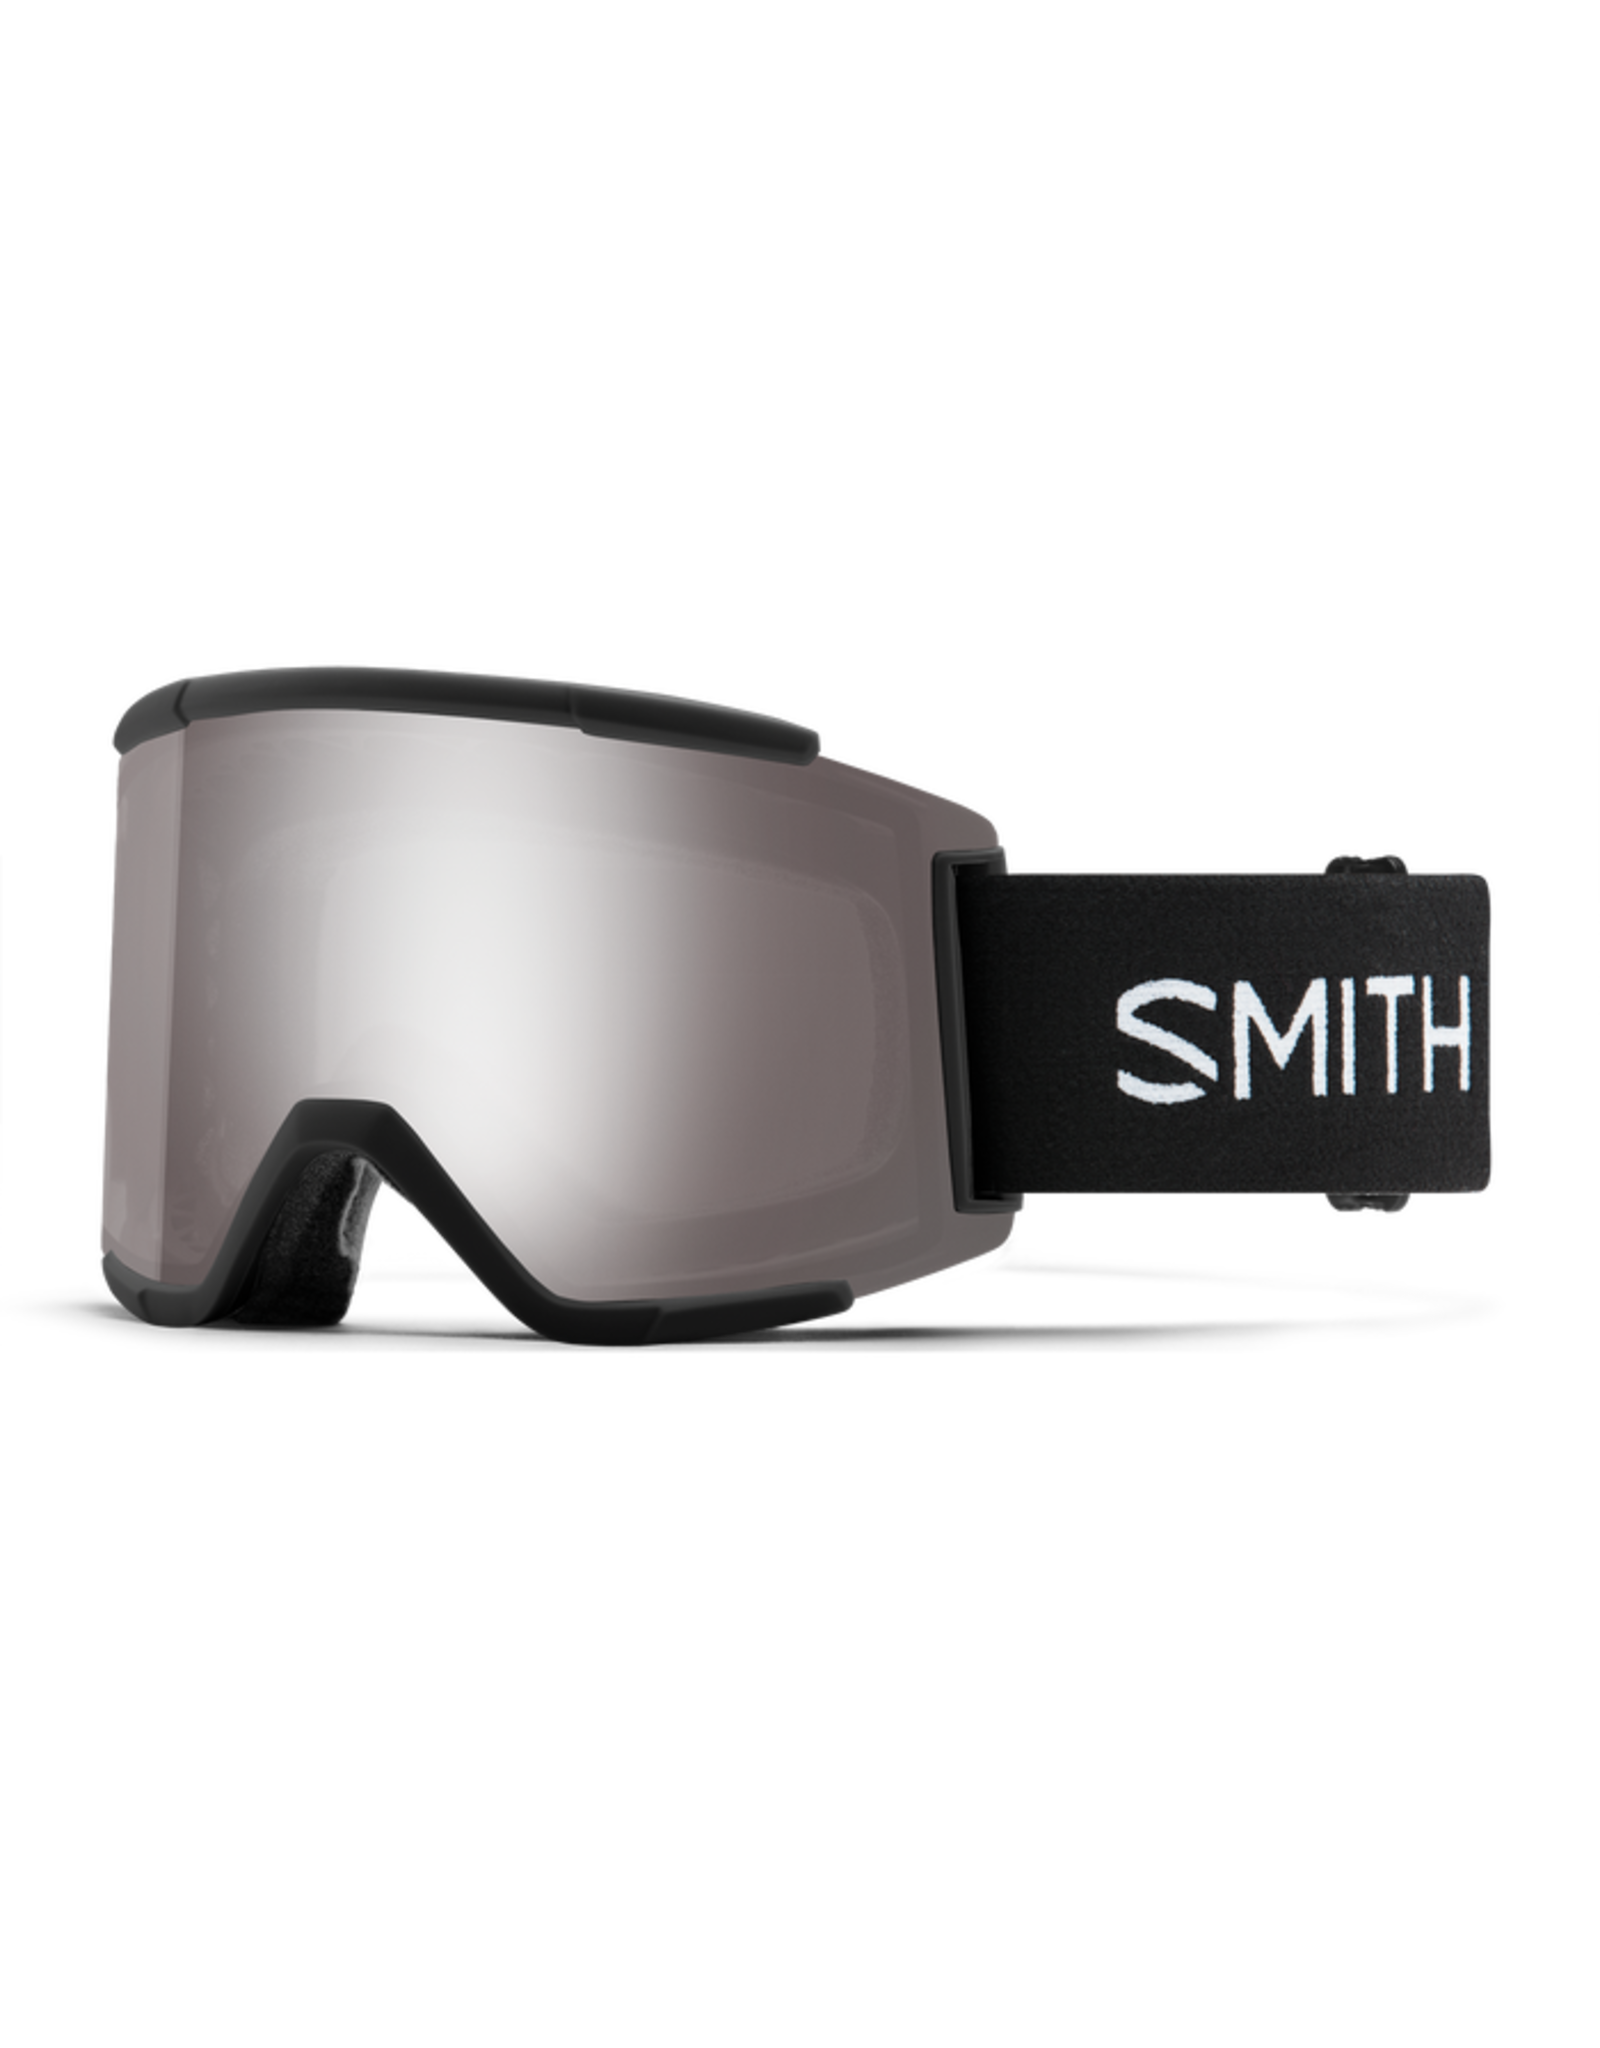 smith optics Smith Squad XL Goggles - Chromapop Sun Platinum Mirror - Black